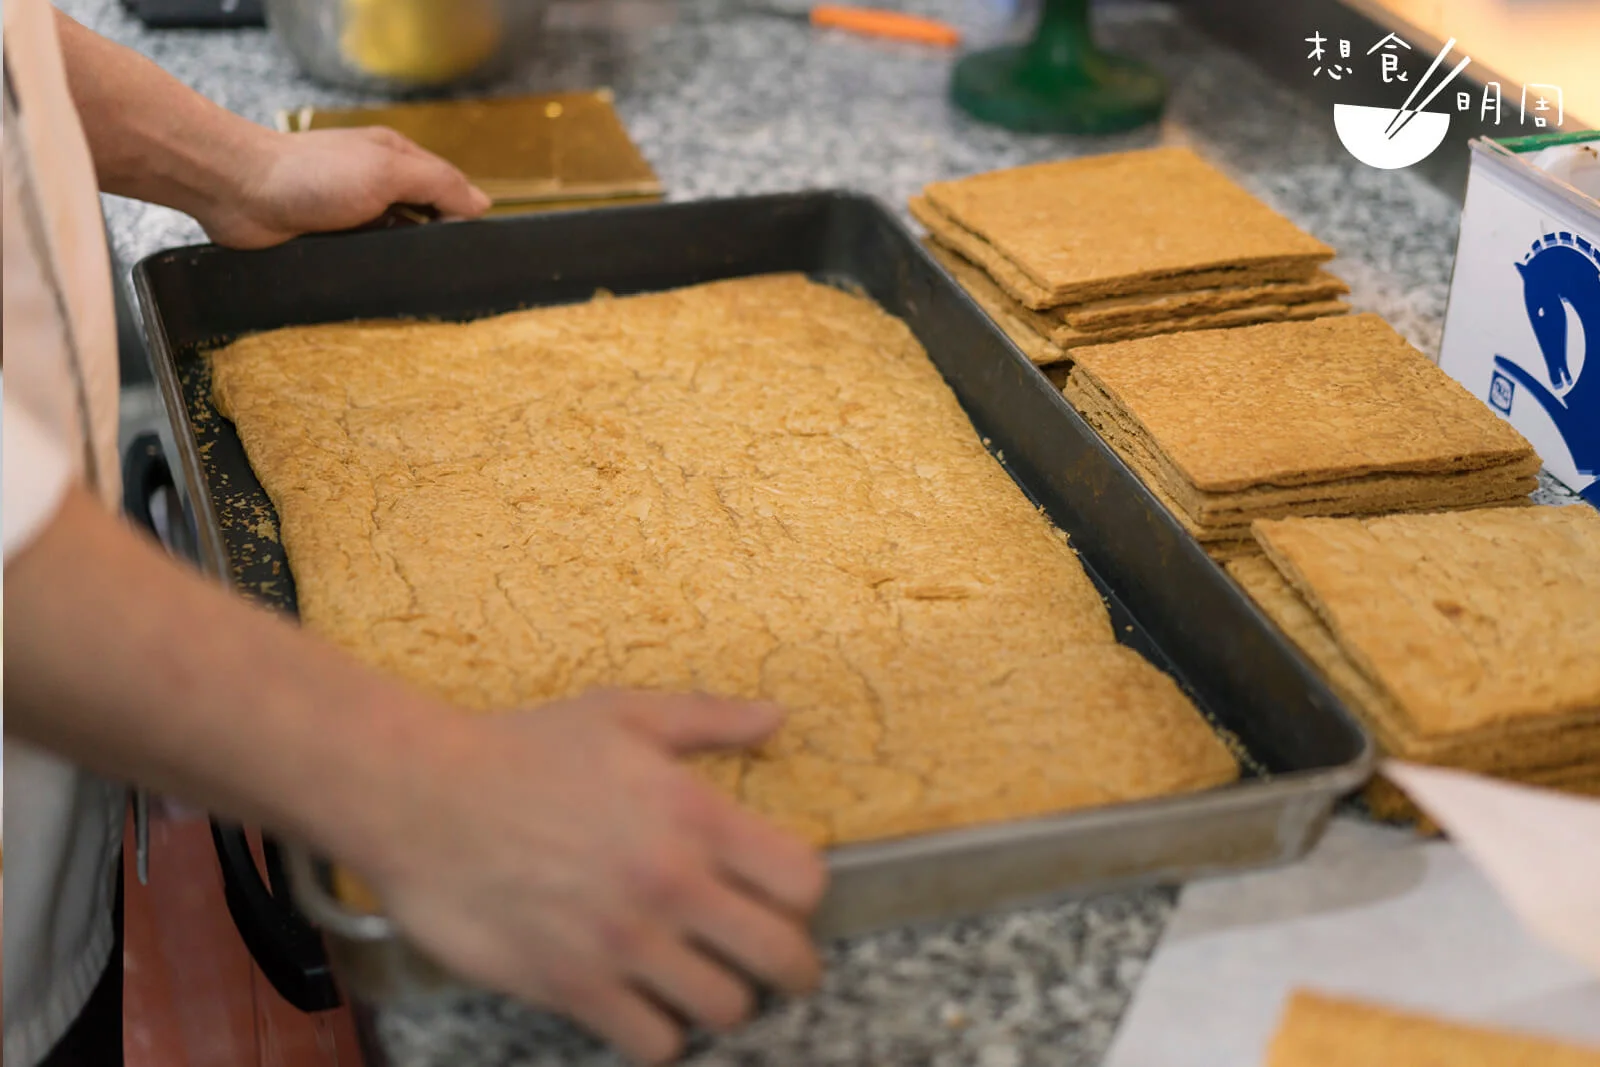 Jerry說，他們製作酥脆的秘訣不是要摺多少層；而是會一個煲在酥皮上焗，那就可以令酥皮不會散開又有層次。